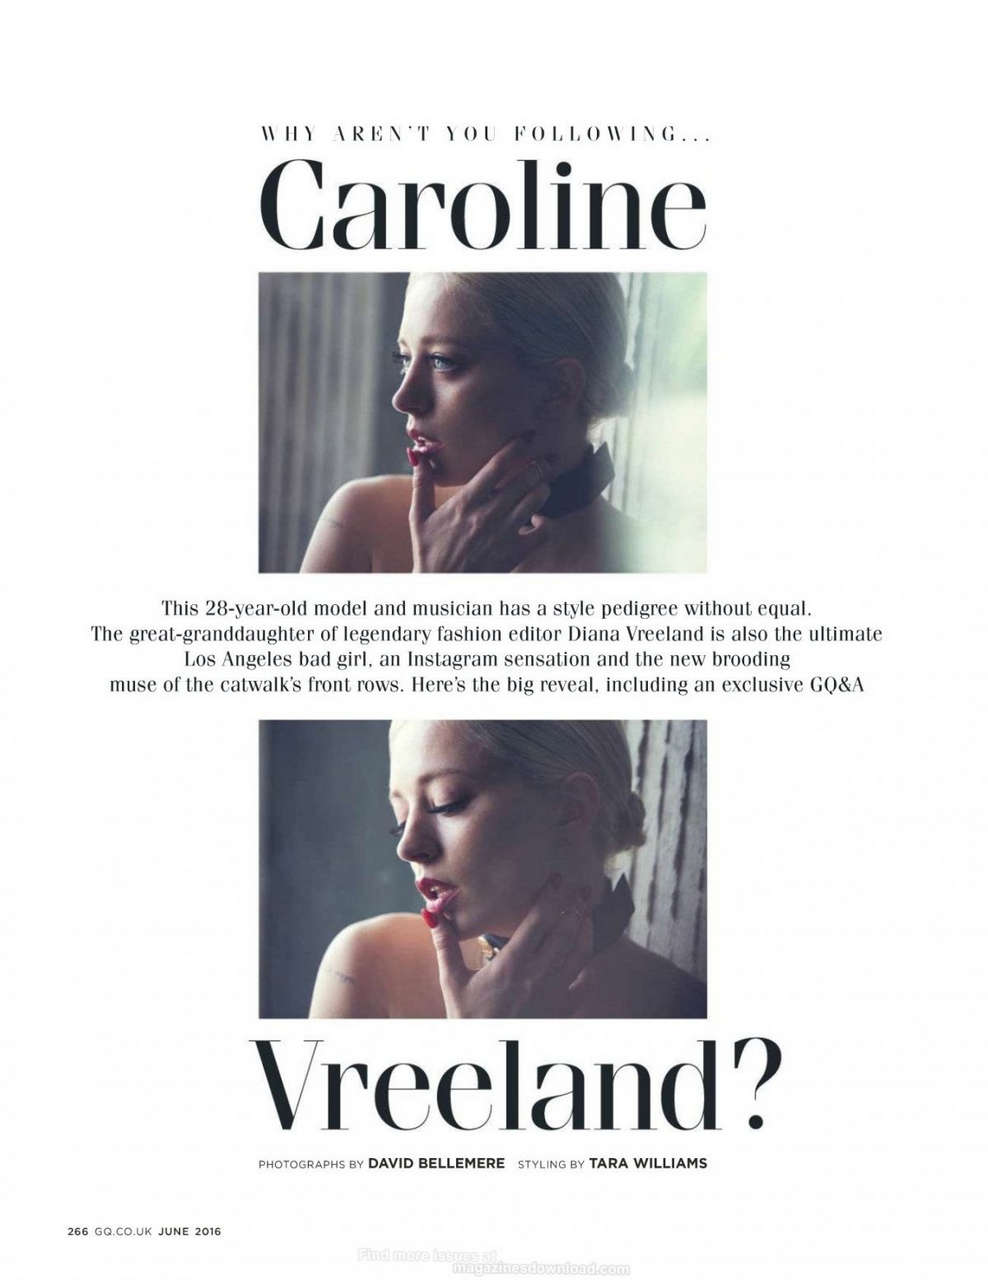 Caroline Vreeand Gq Magazine June 2016 Issue